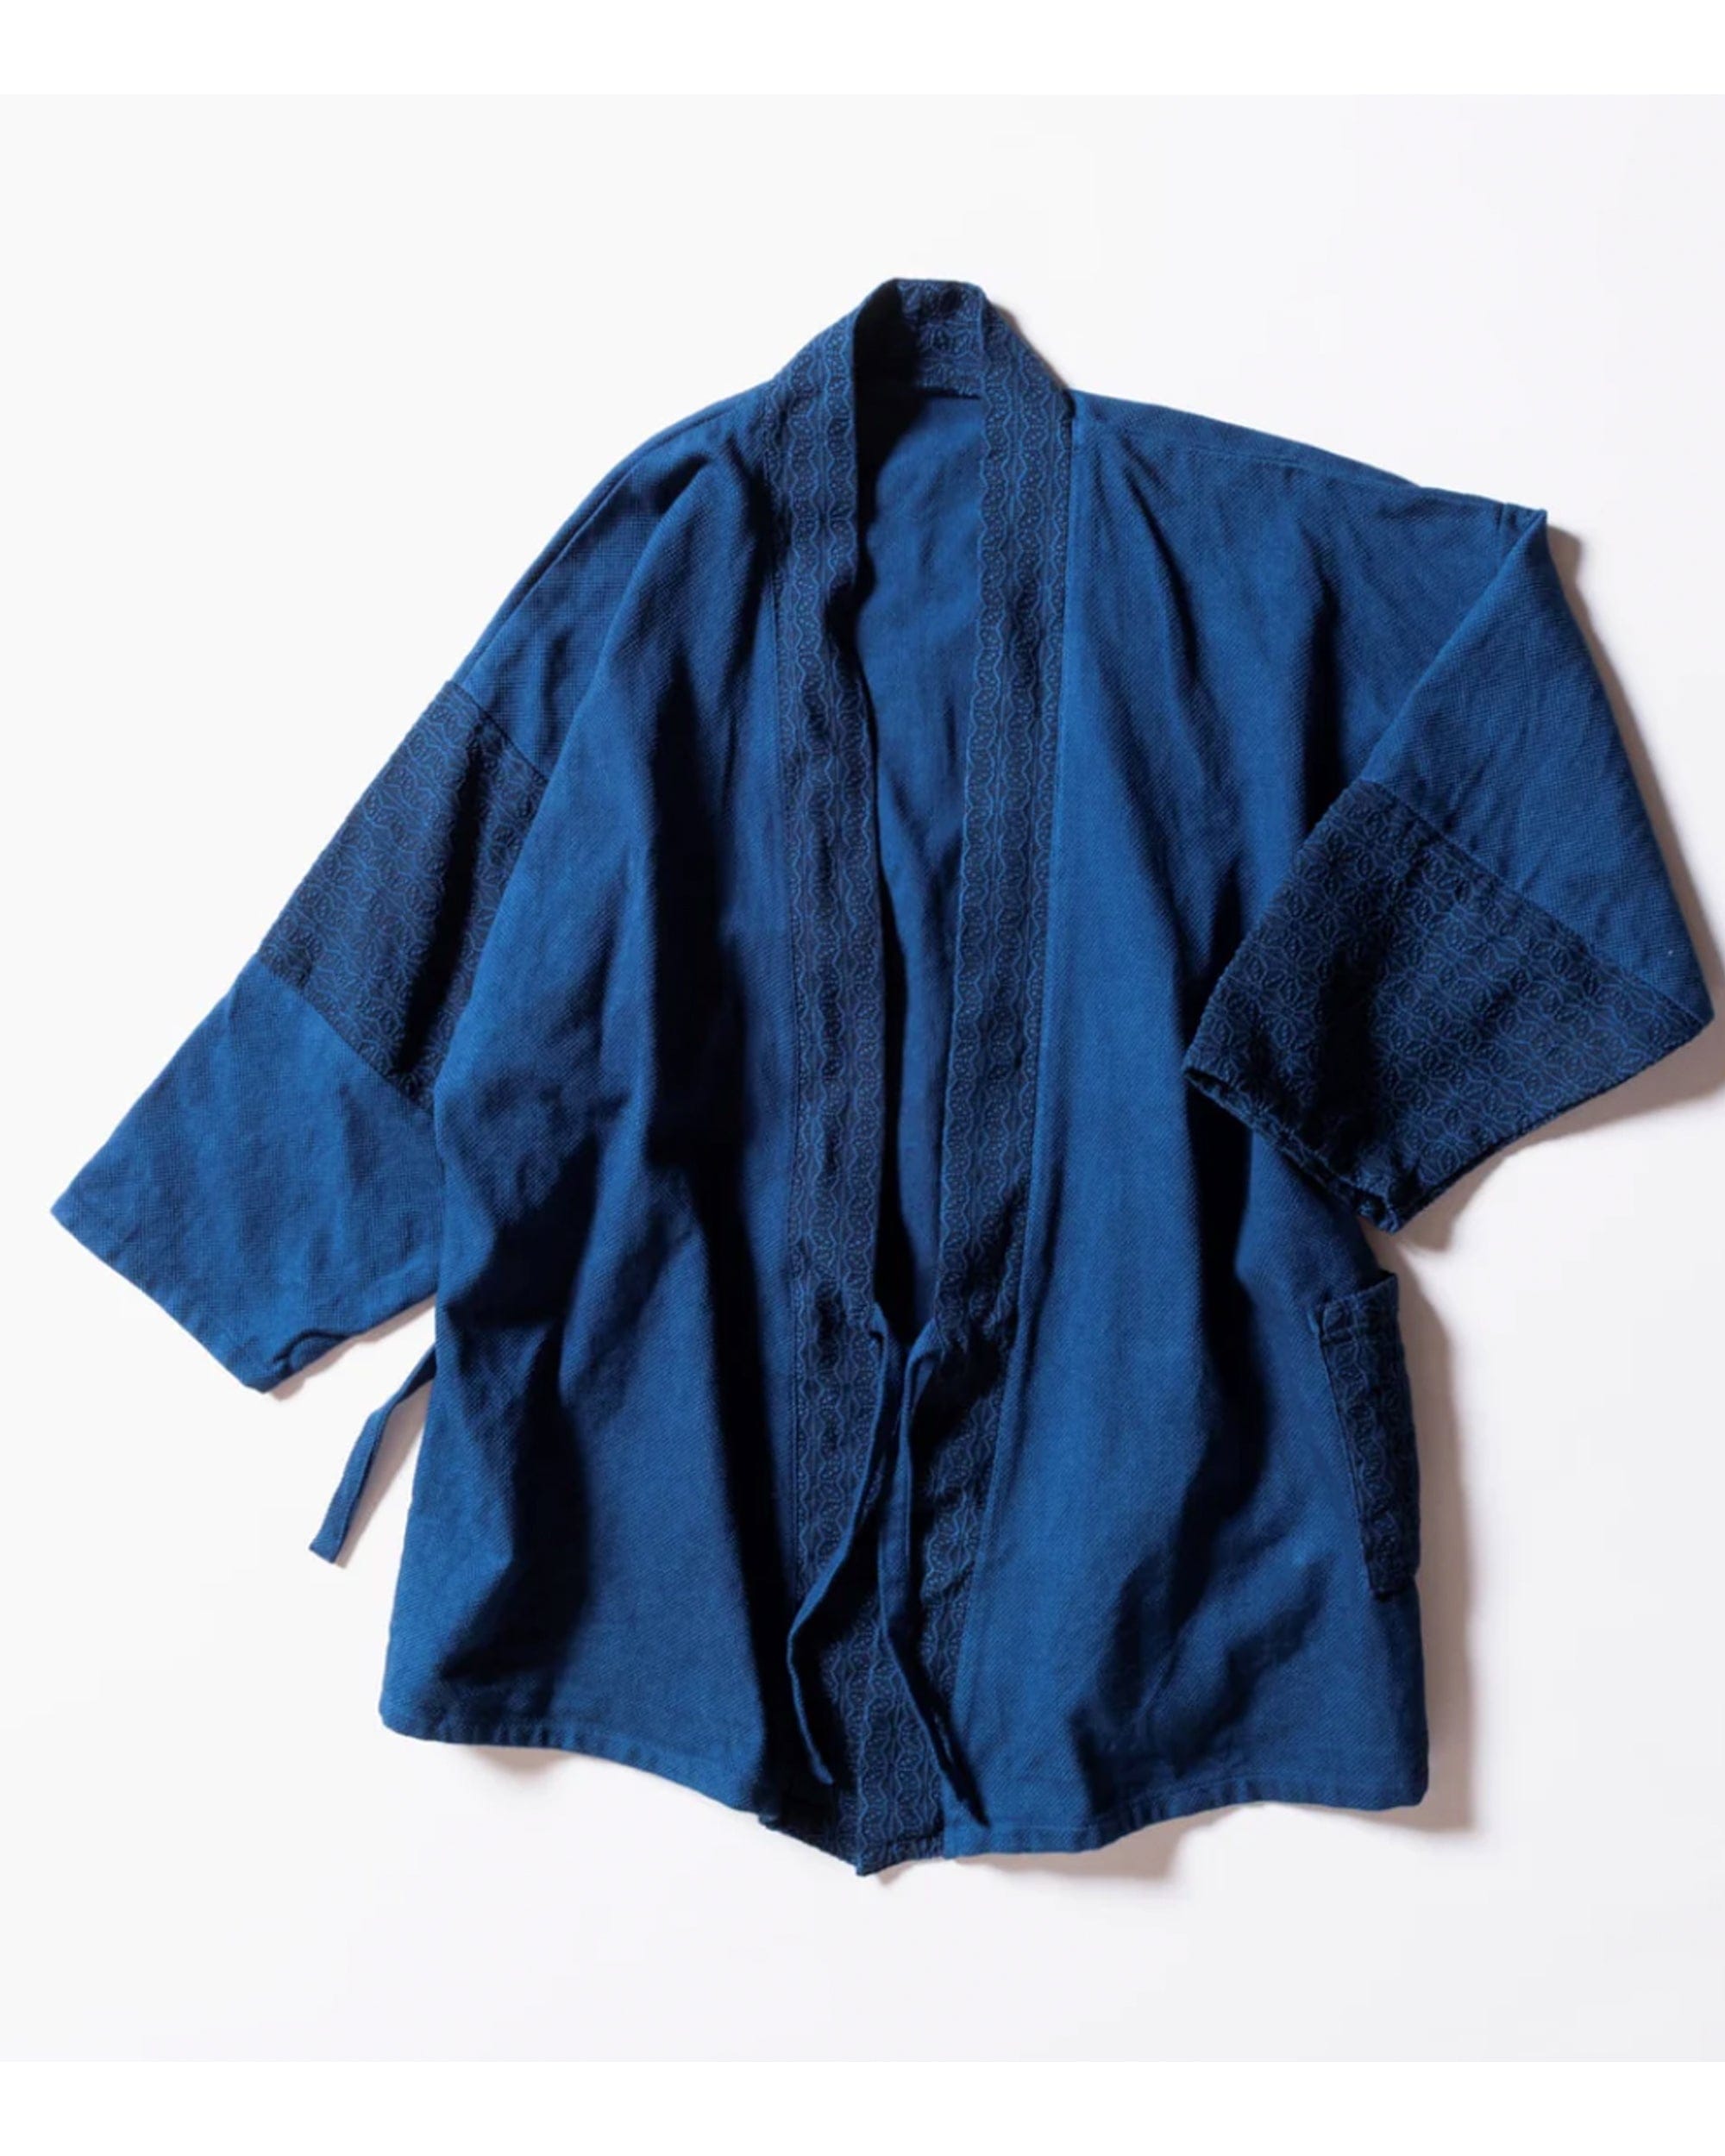 Mastercrafstmanship Patchwork Samue Jacket (Blue) Sashiko - Kimono style